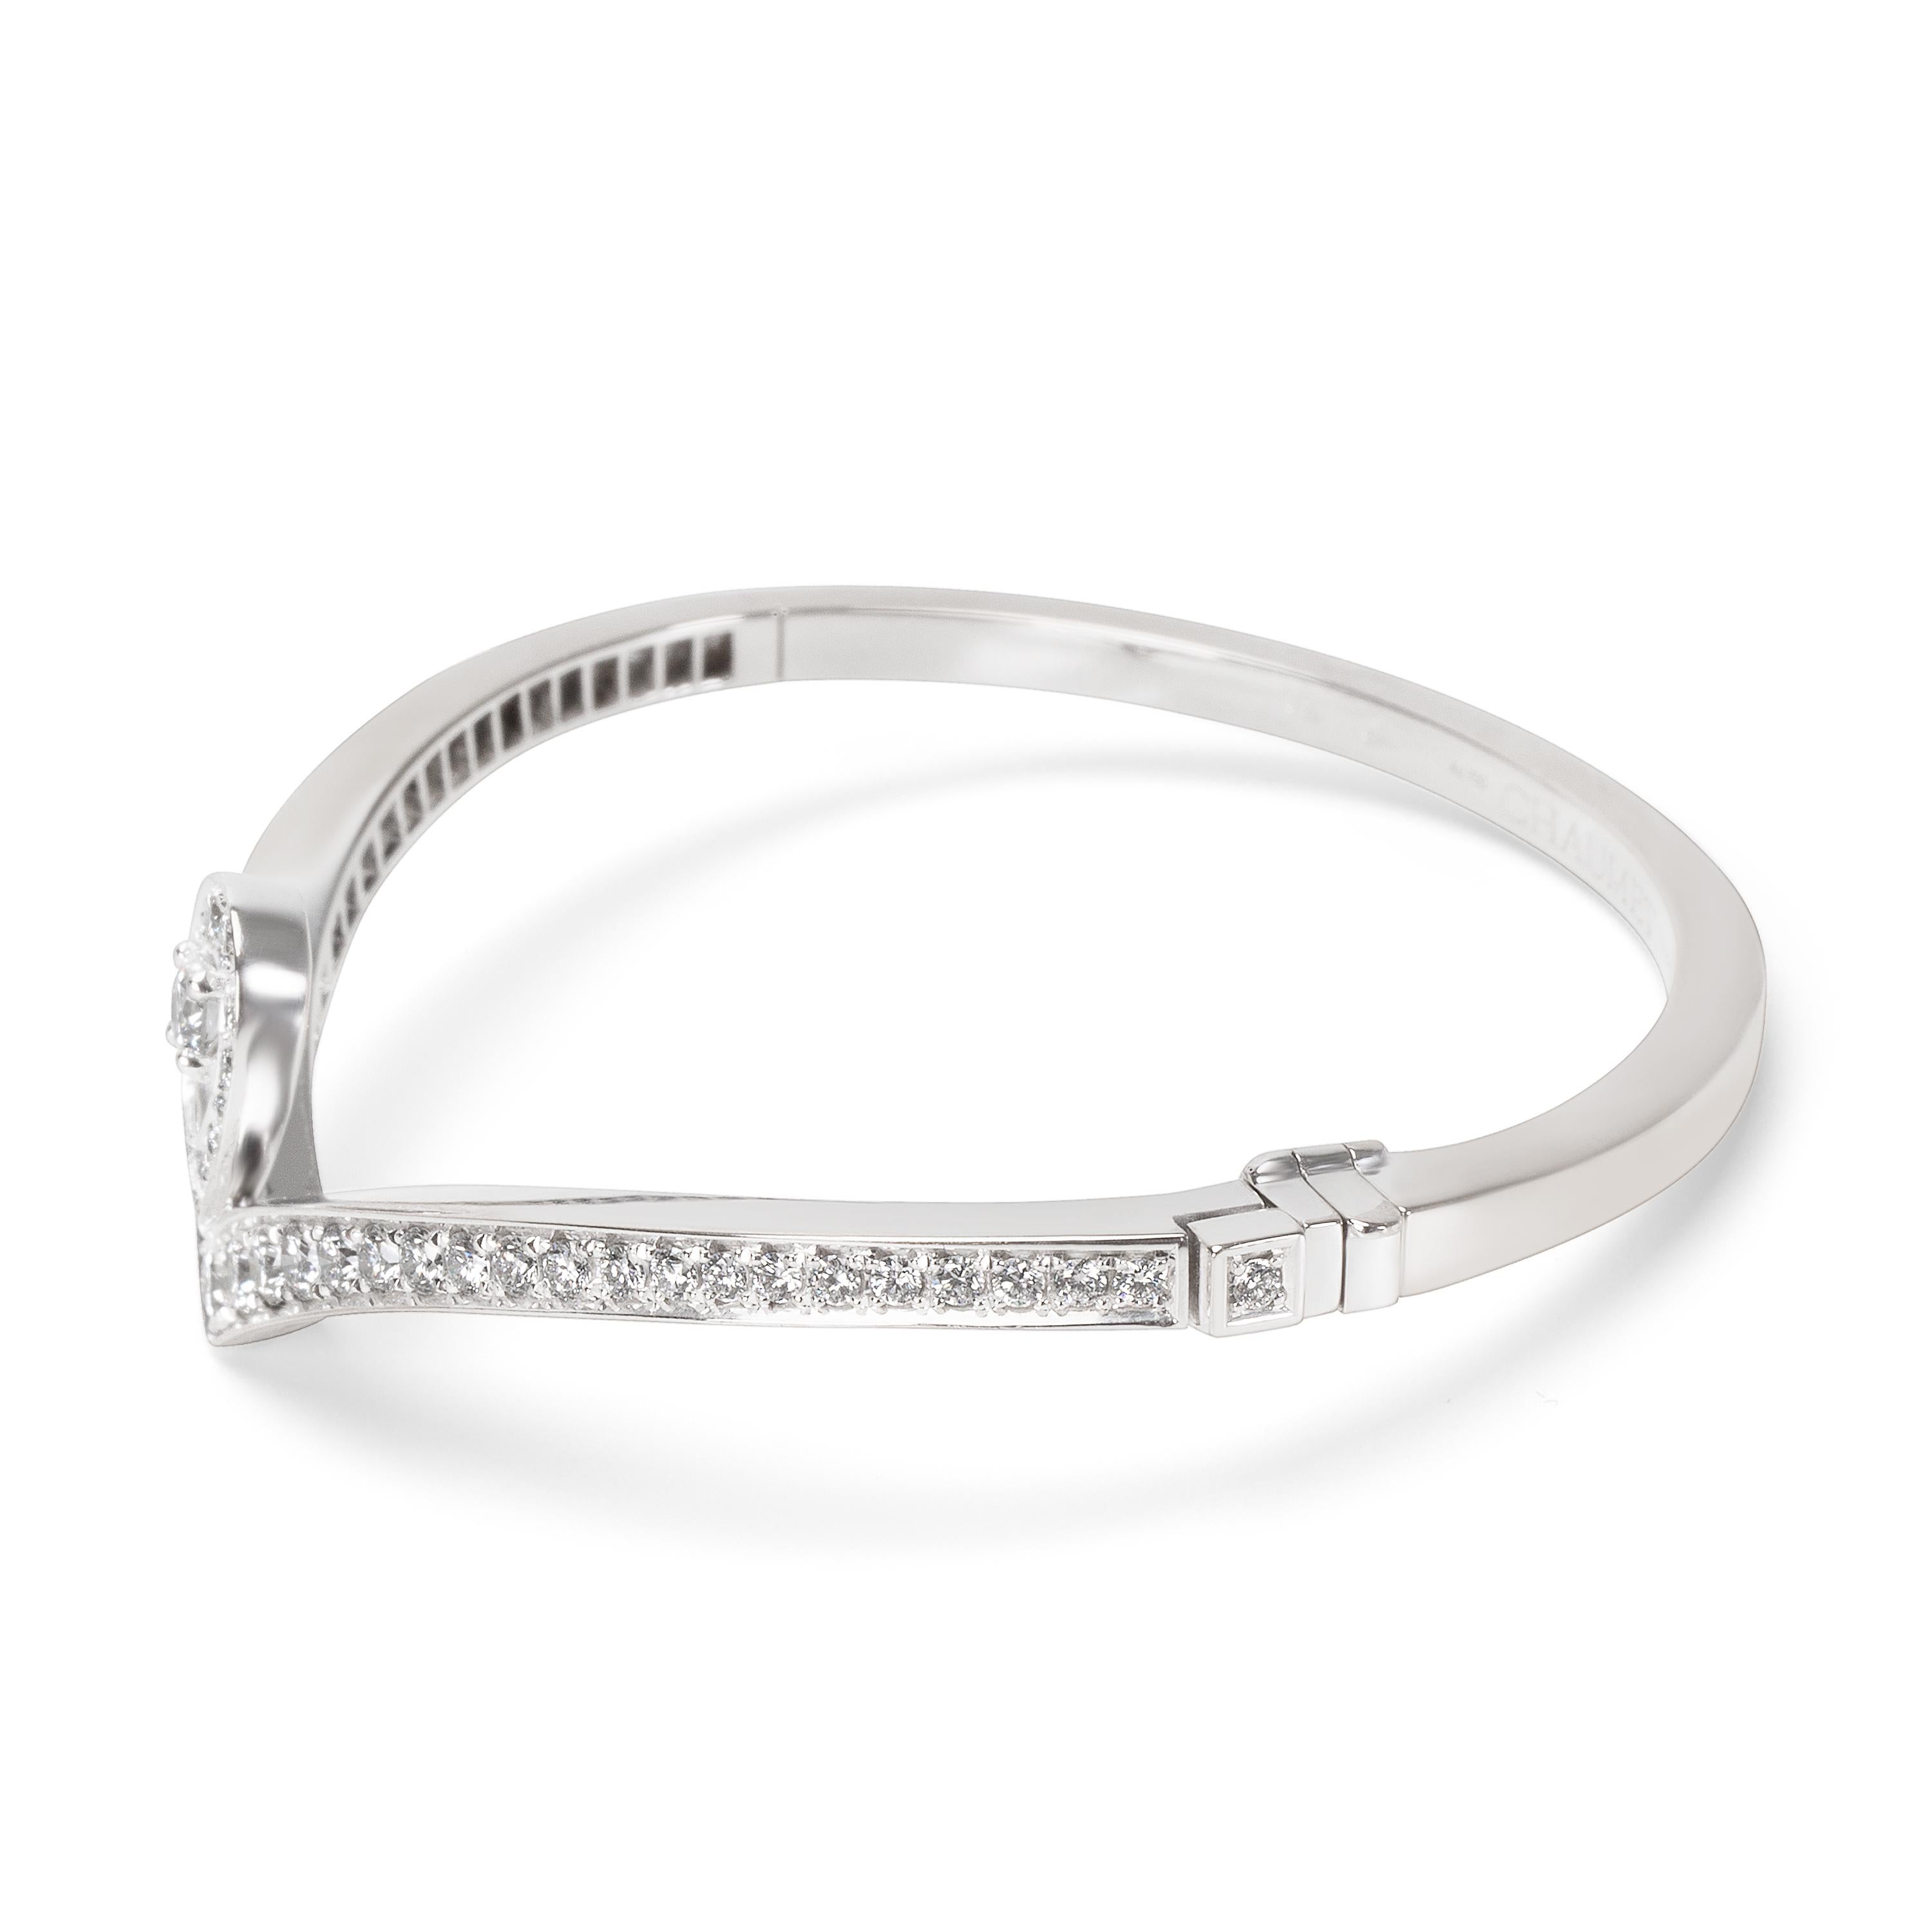 Women's Chaumet Diamond Bracelet in 18 Karat White Gold 1.70 Carat